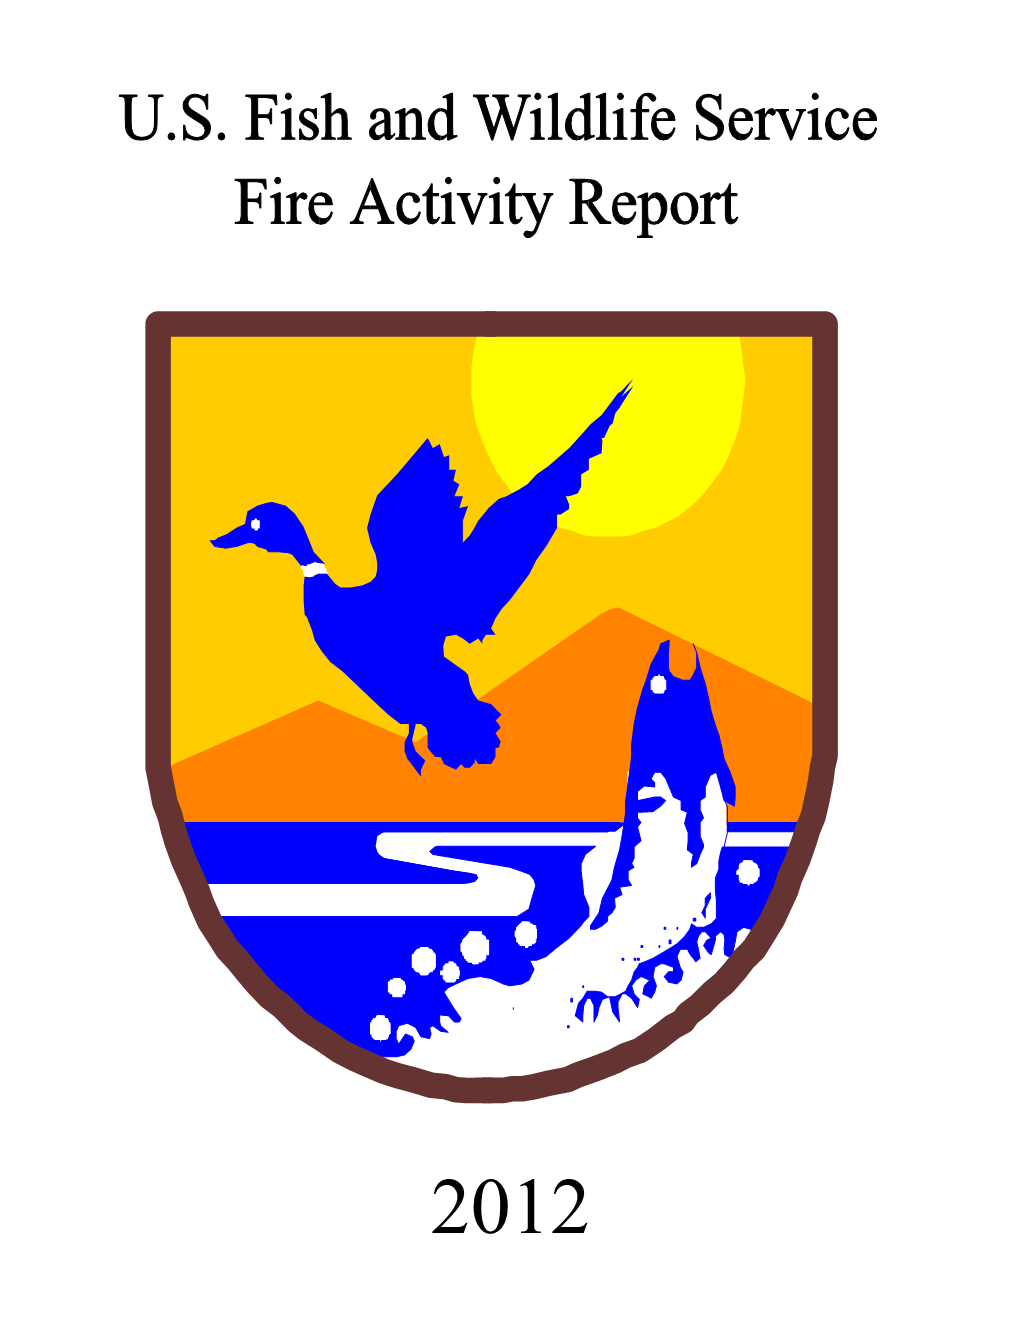 2012 Fire Activity Report